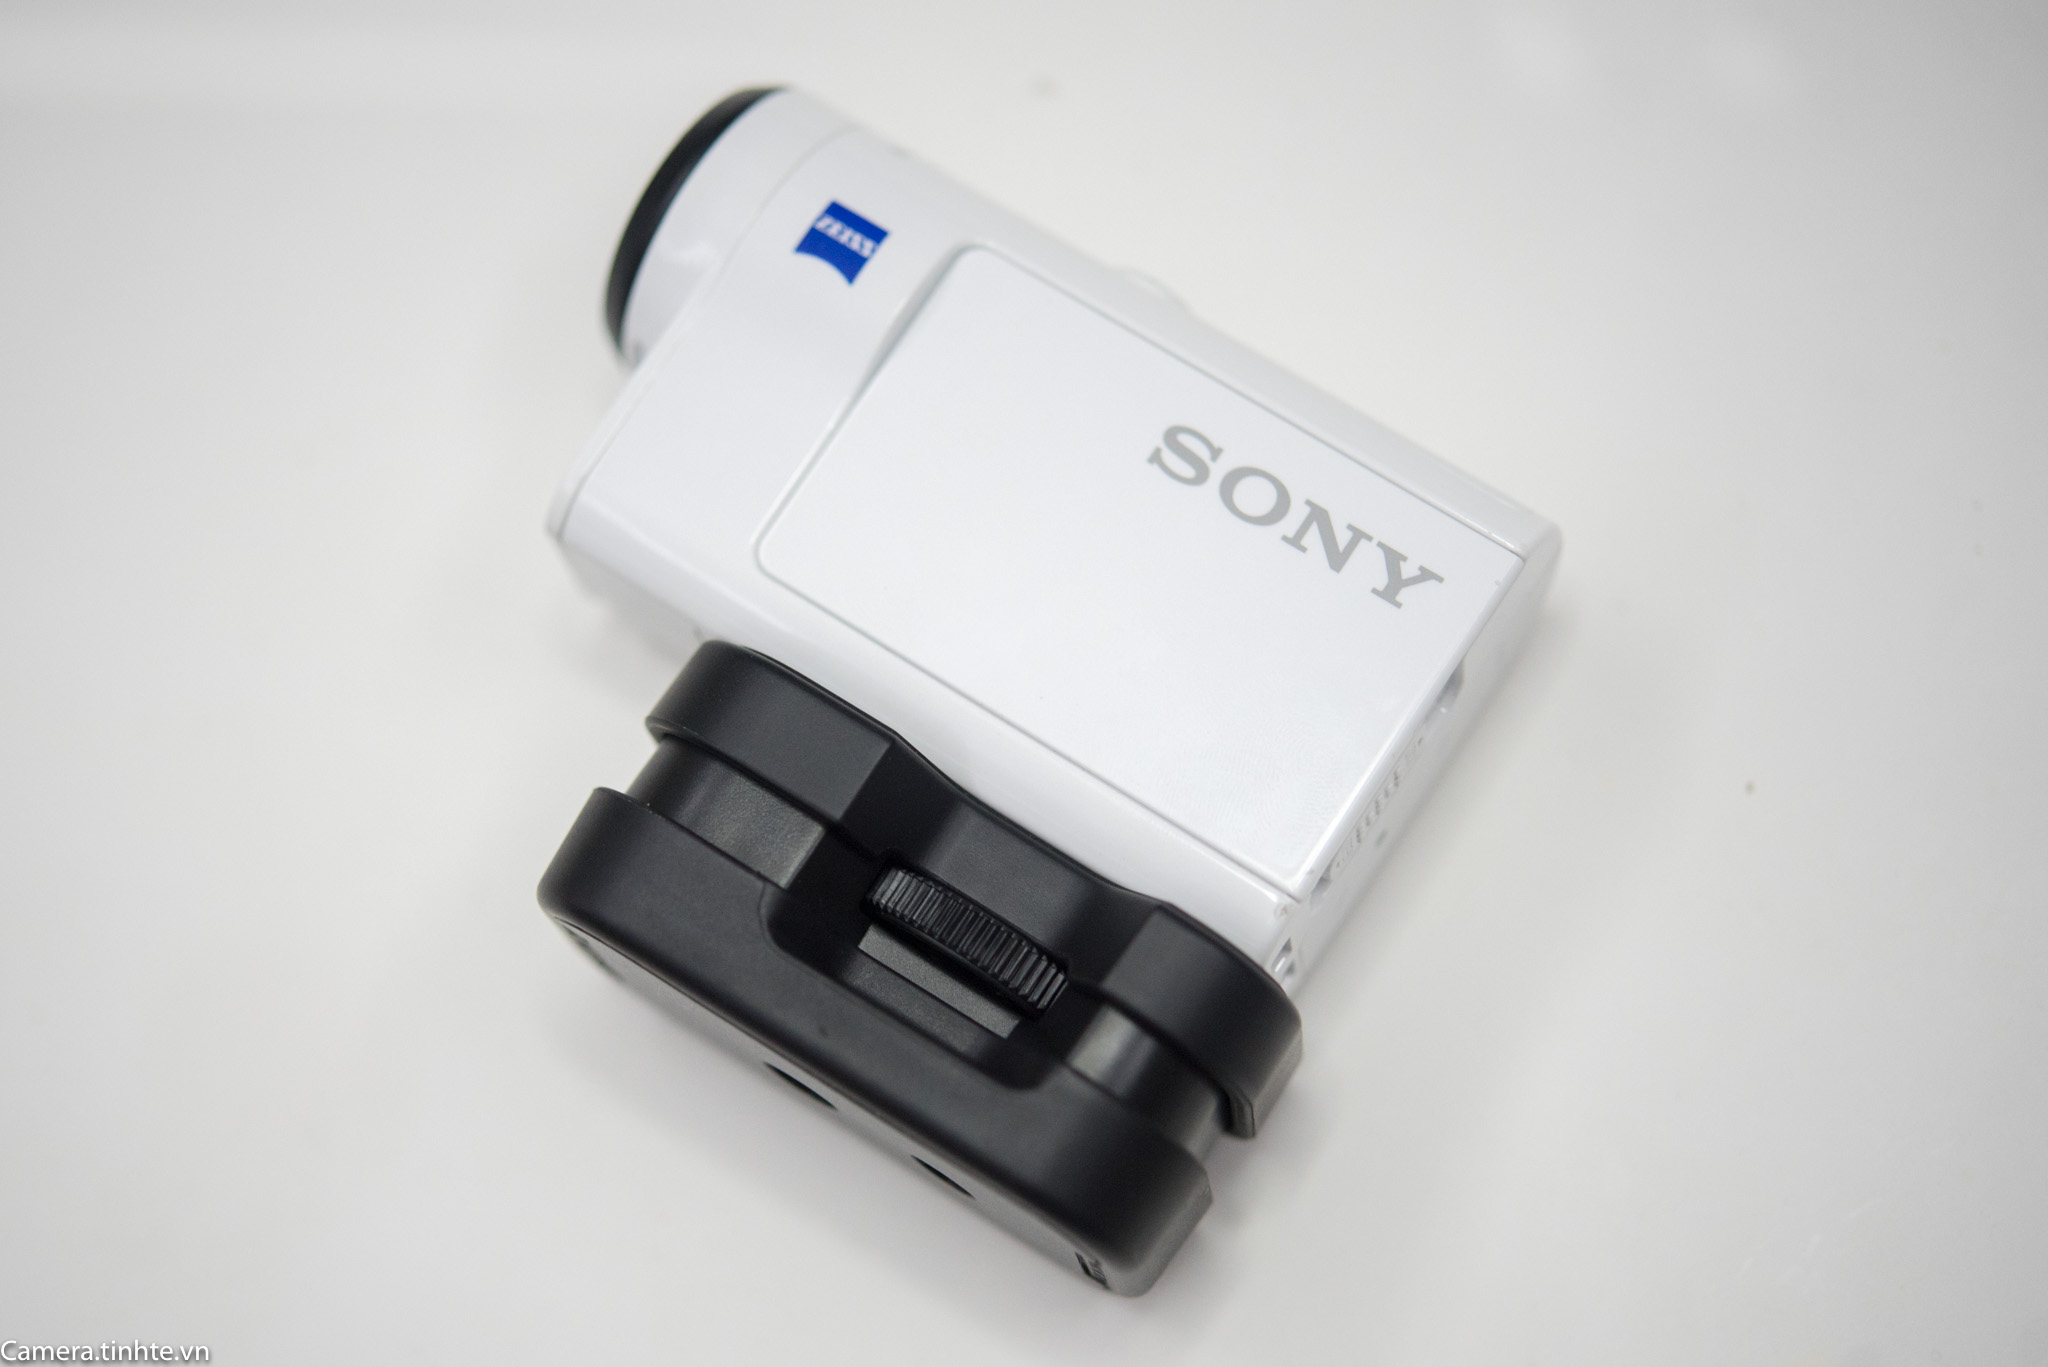 Phu kien Sony FDR-X3000 - Camera.tinhte.vn -12.jpg